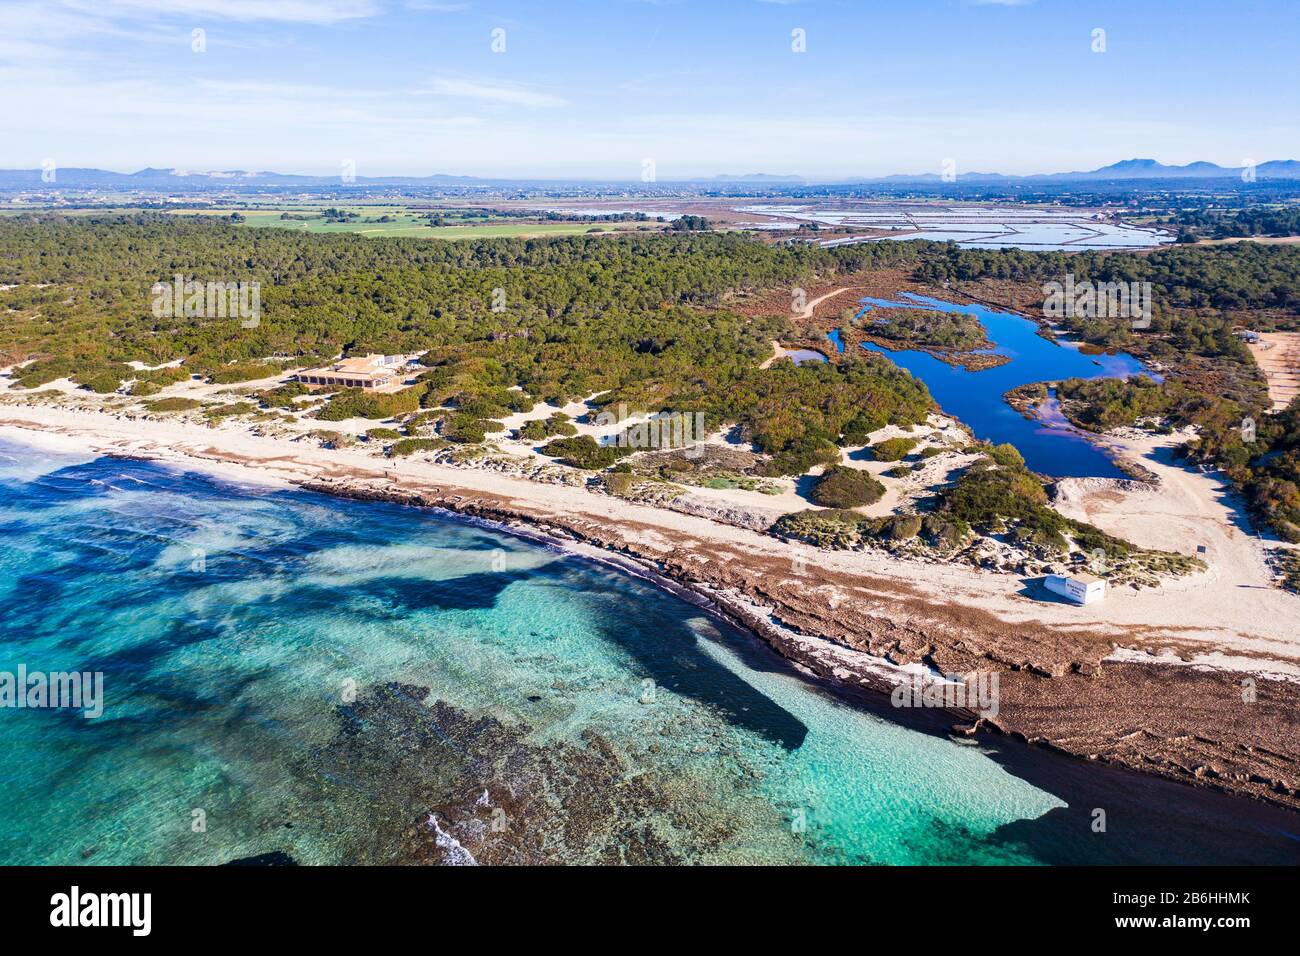 Spiaggia di es Trenc e laguna d'acqua salmastra, Parco Naturale es Trenc-Salobrar de Campos, vicino a Sant Jordi, vista aerea, Maiorca, Isole Baleari, Spagna Foto Stock